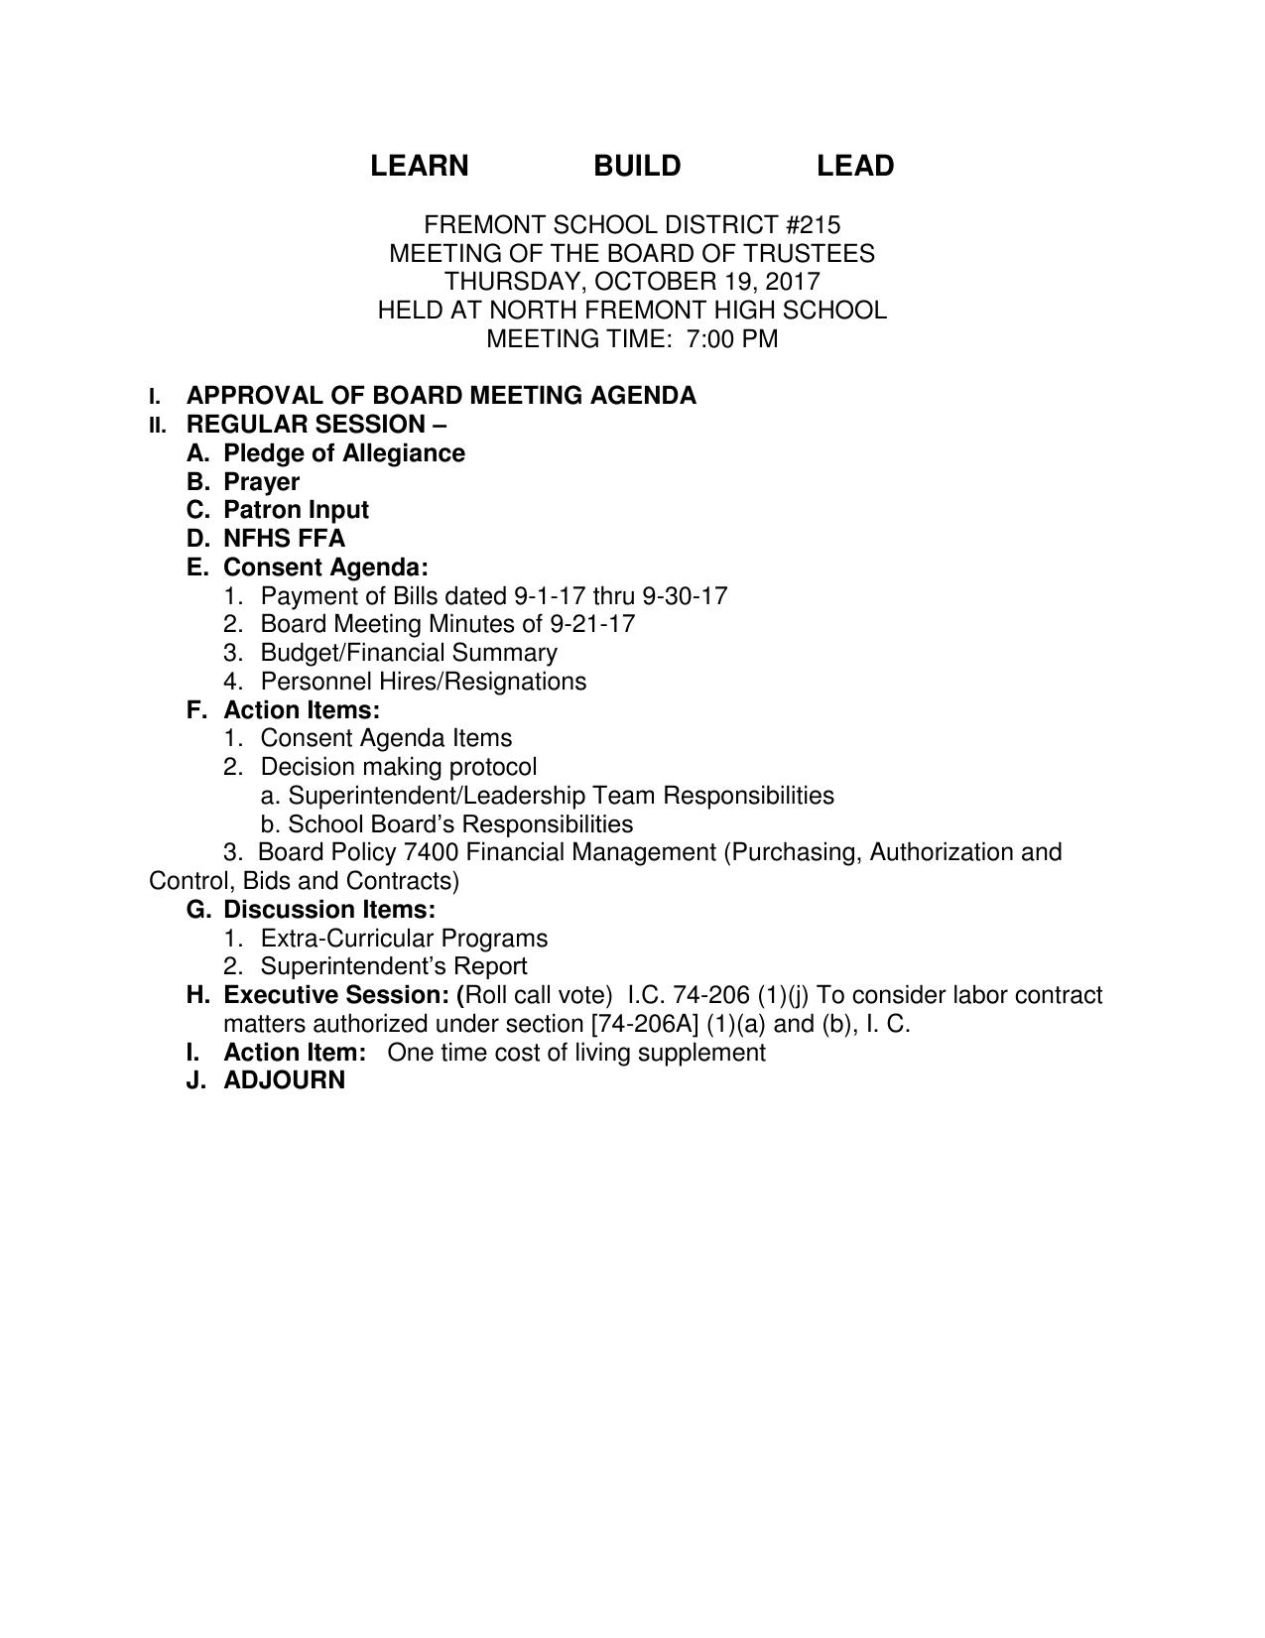 manheim township school district school board meeting agenda